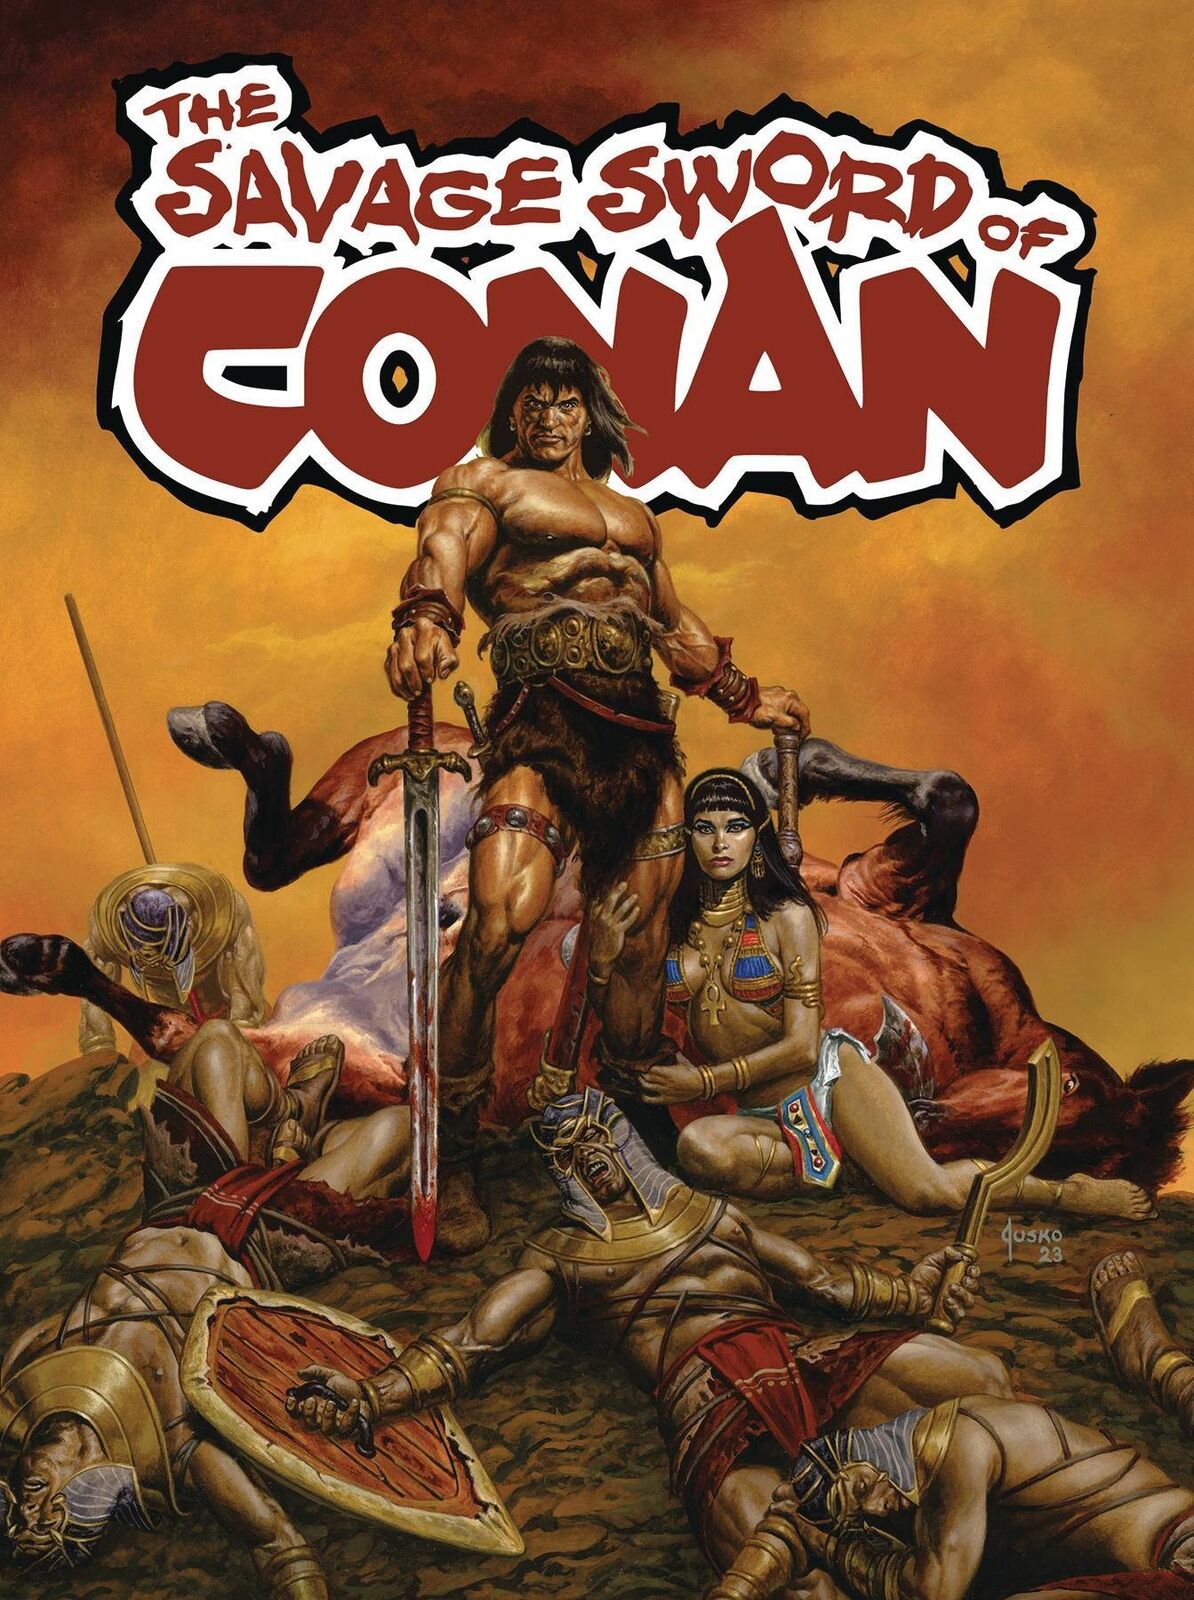 SAVAGE SWORD OF CONAN #1 (OF 6) CVR A JUSKO TITAN COMICS